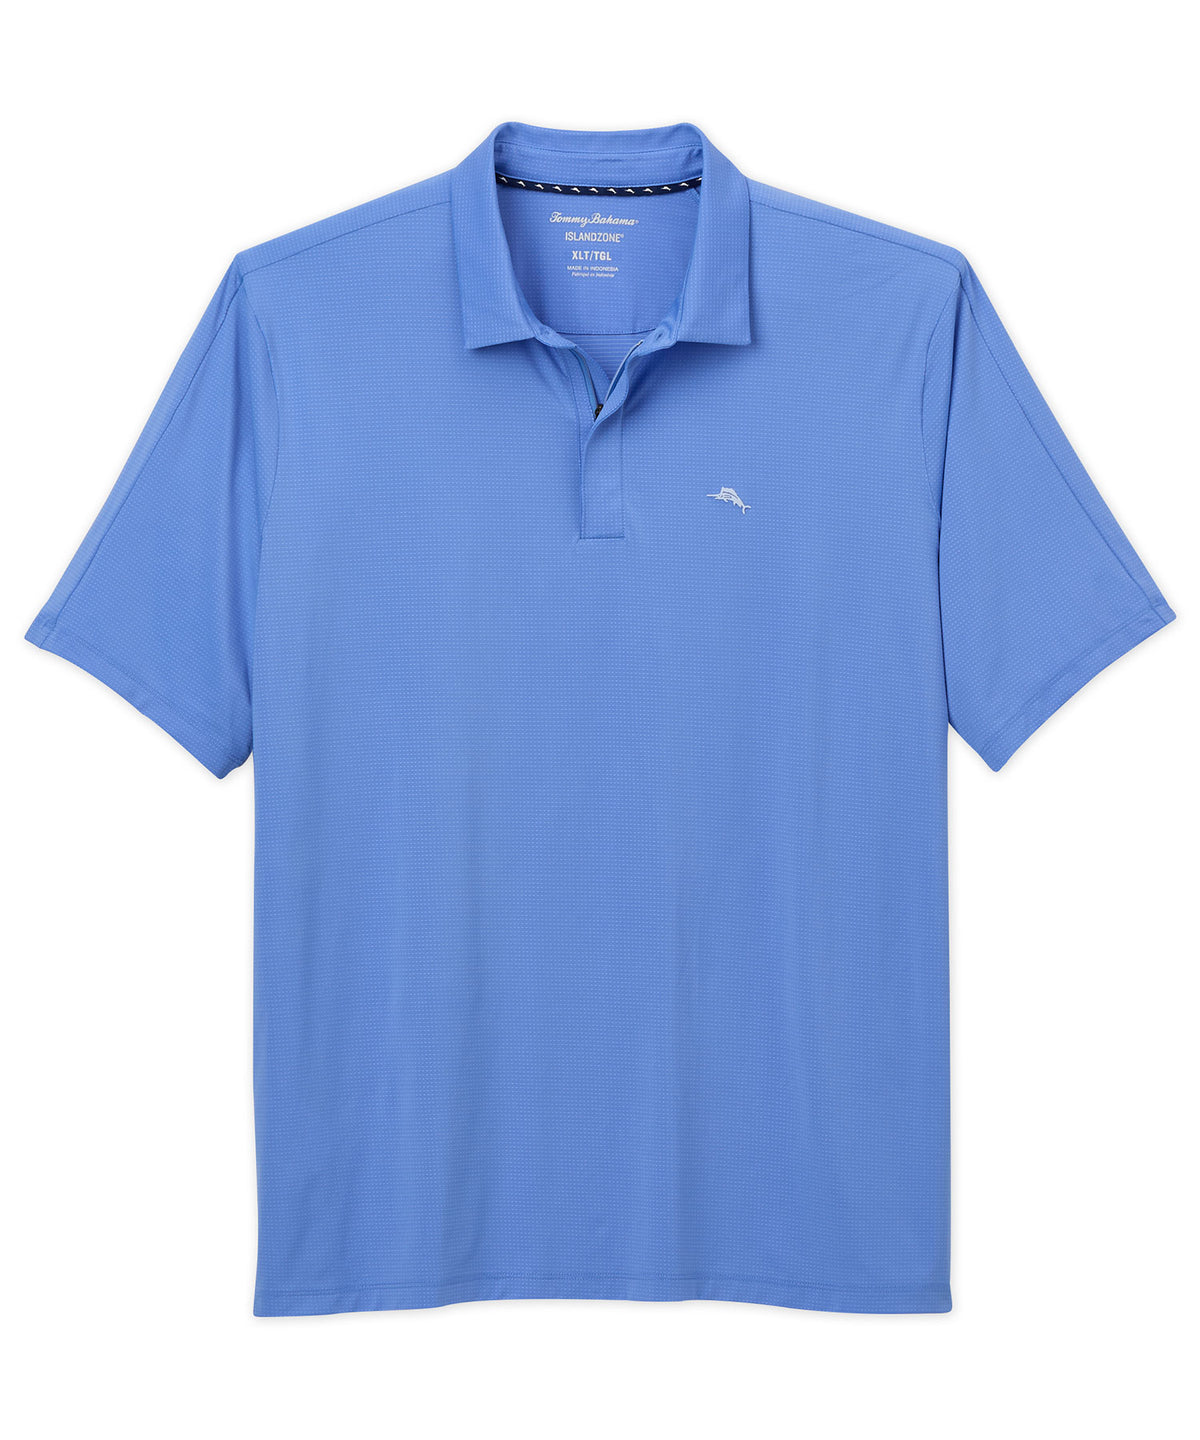 Tommy Bahama Short Sleeve Palm Desert Oasis Polo Knit Shirt, Big & Tall